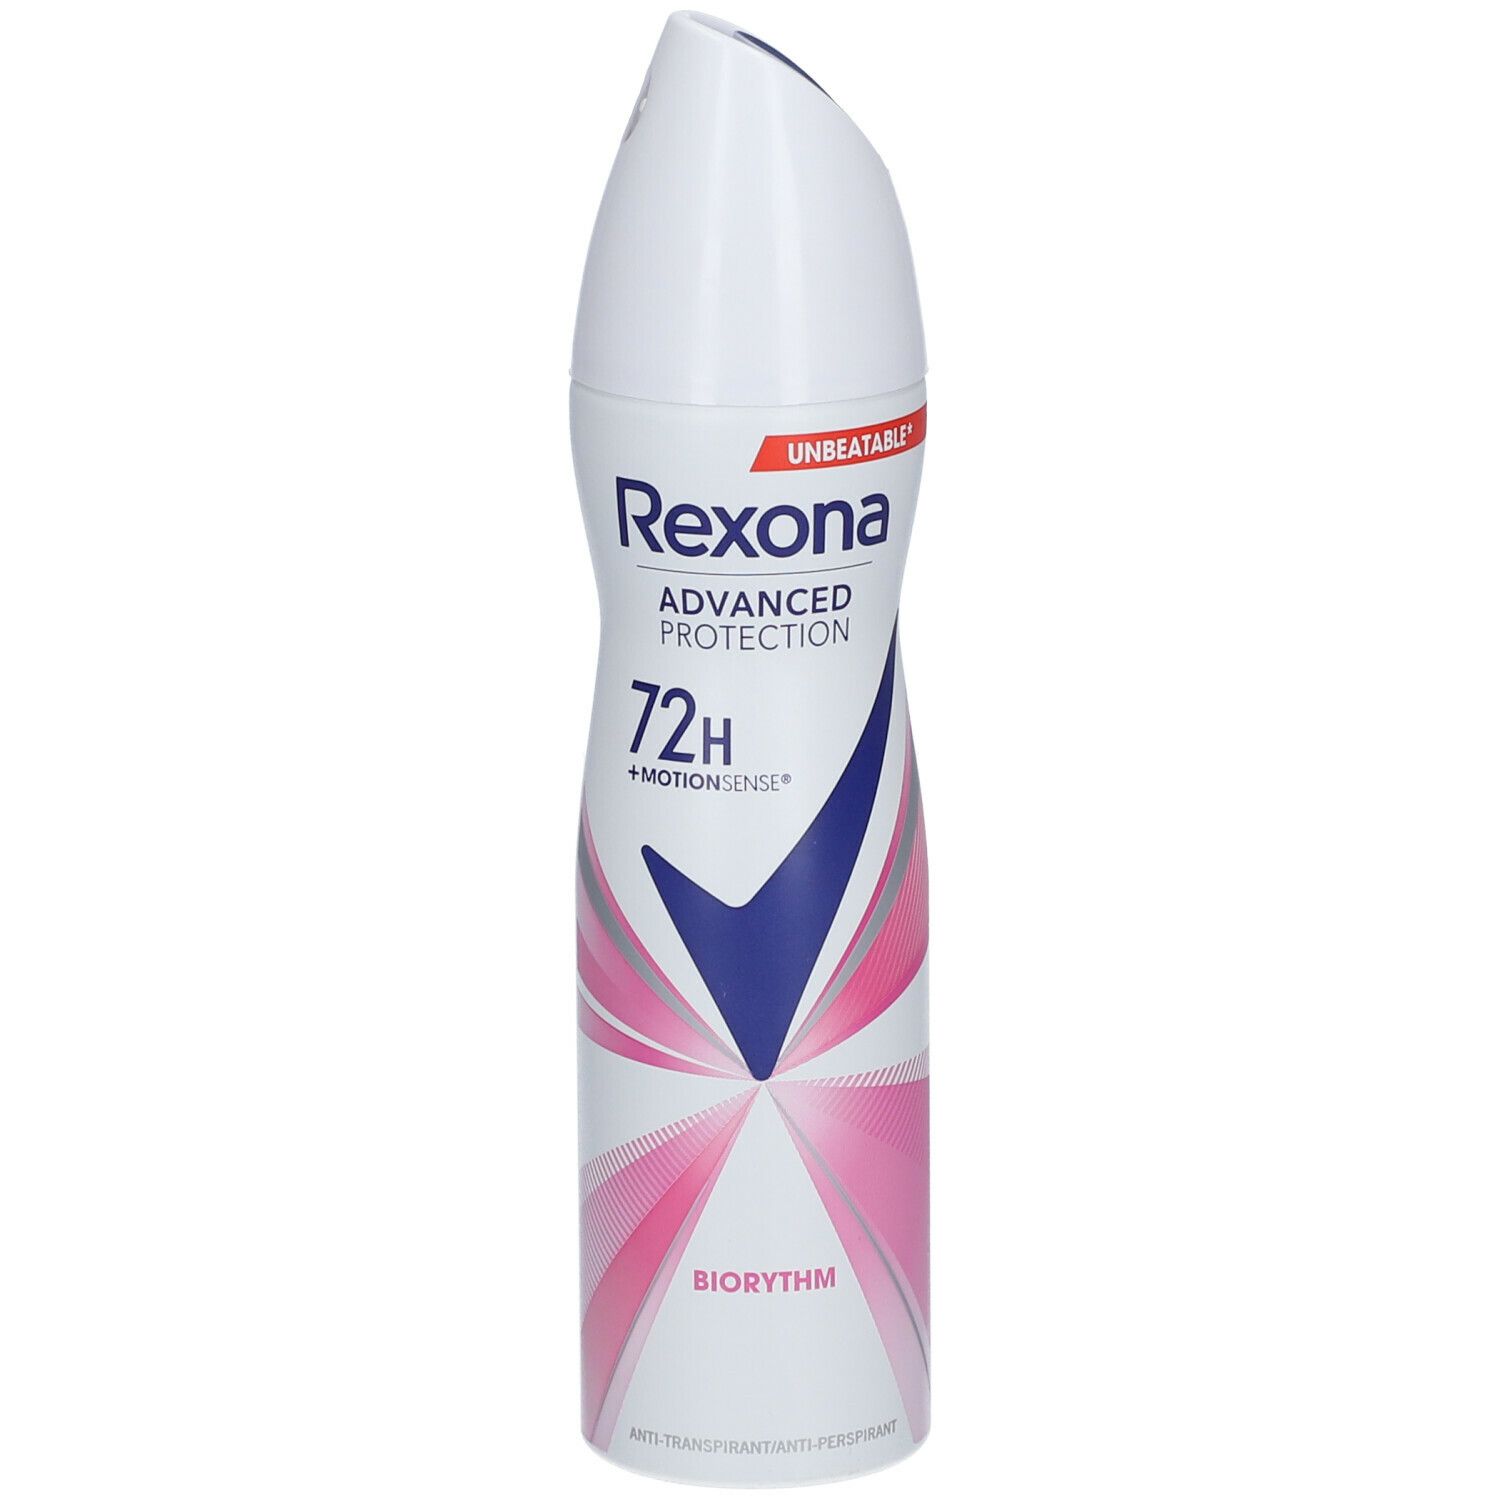 Rexona Advanced Protection Biorythm Anti-Transpirant Déodorant Spray 72h